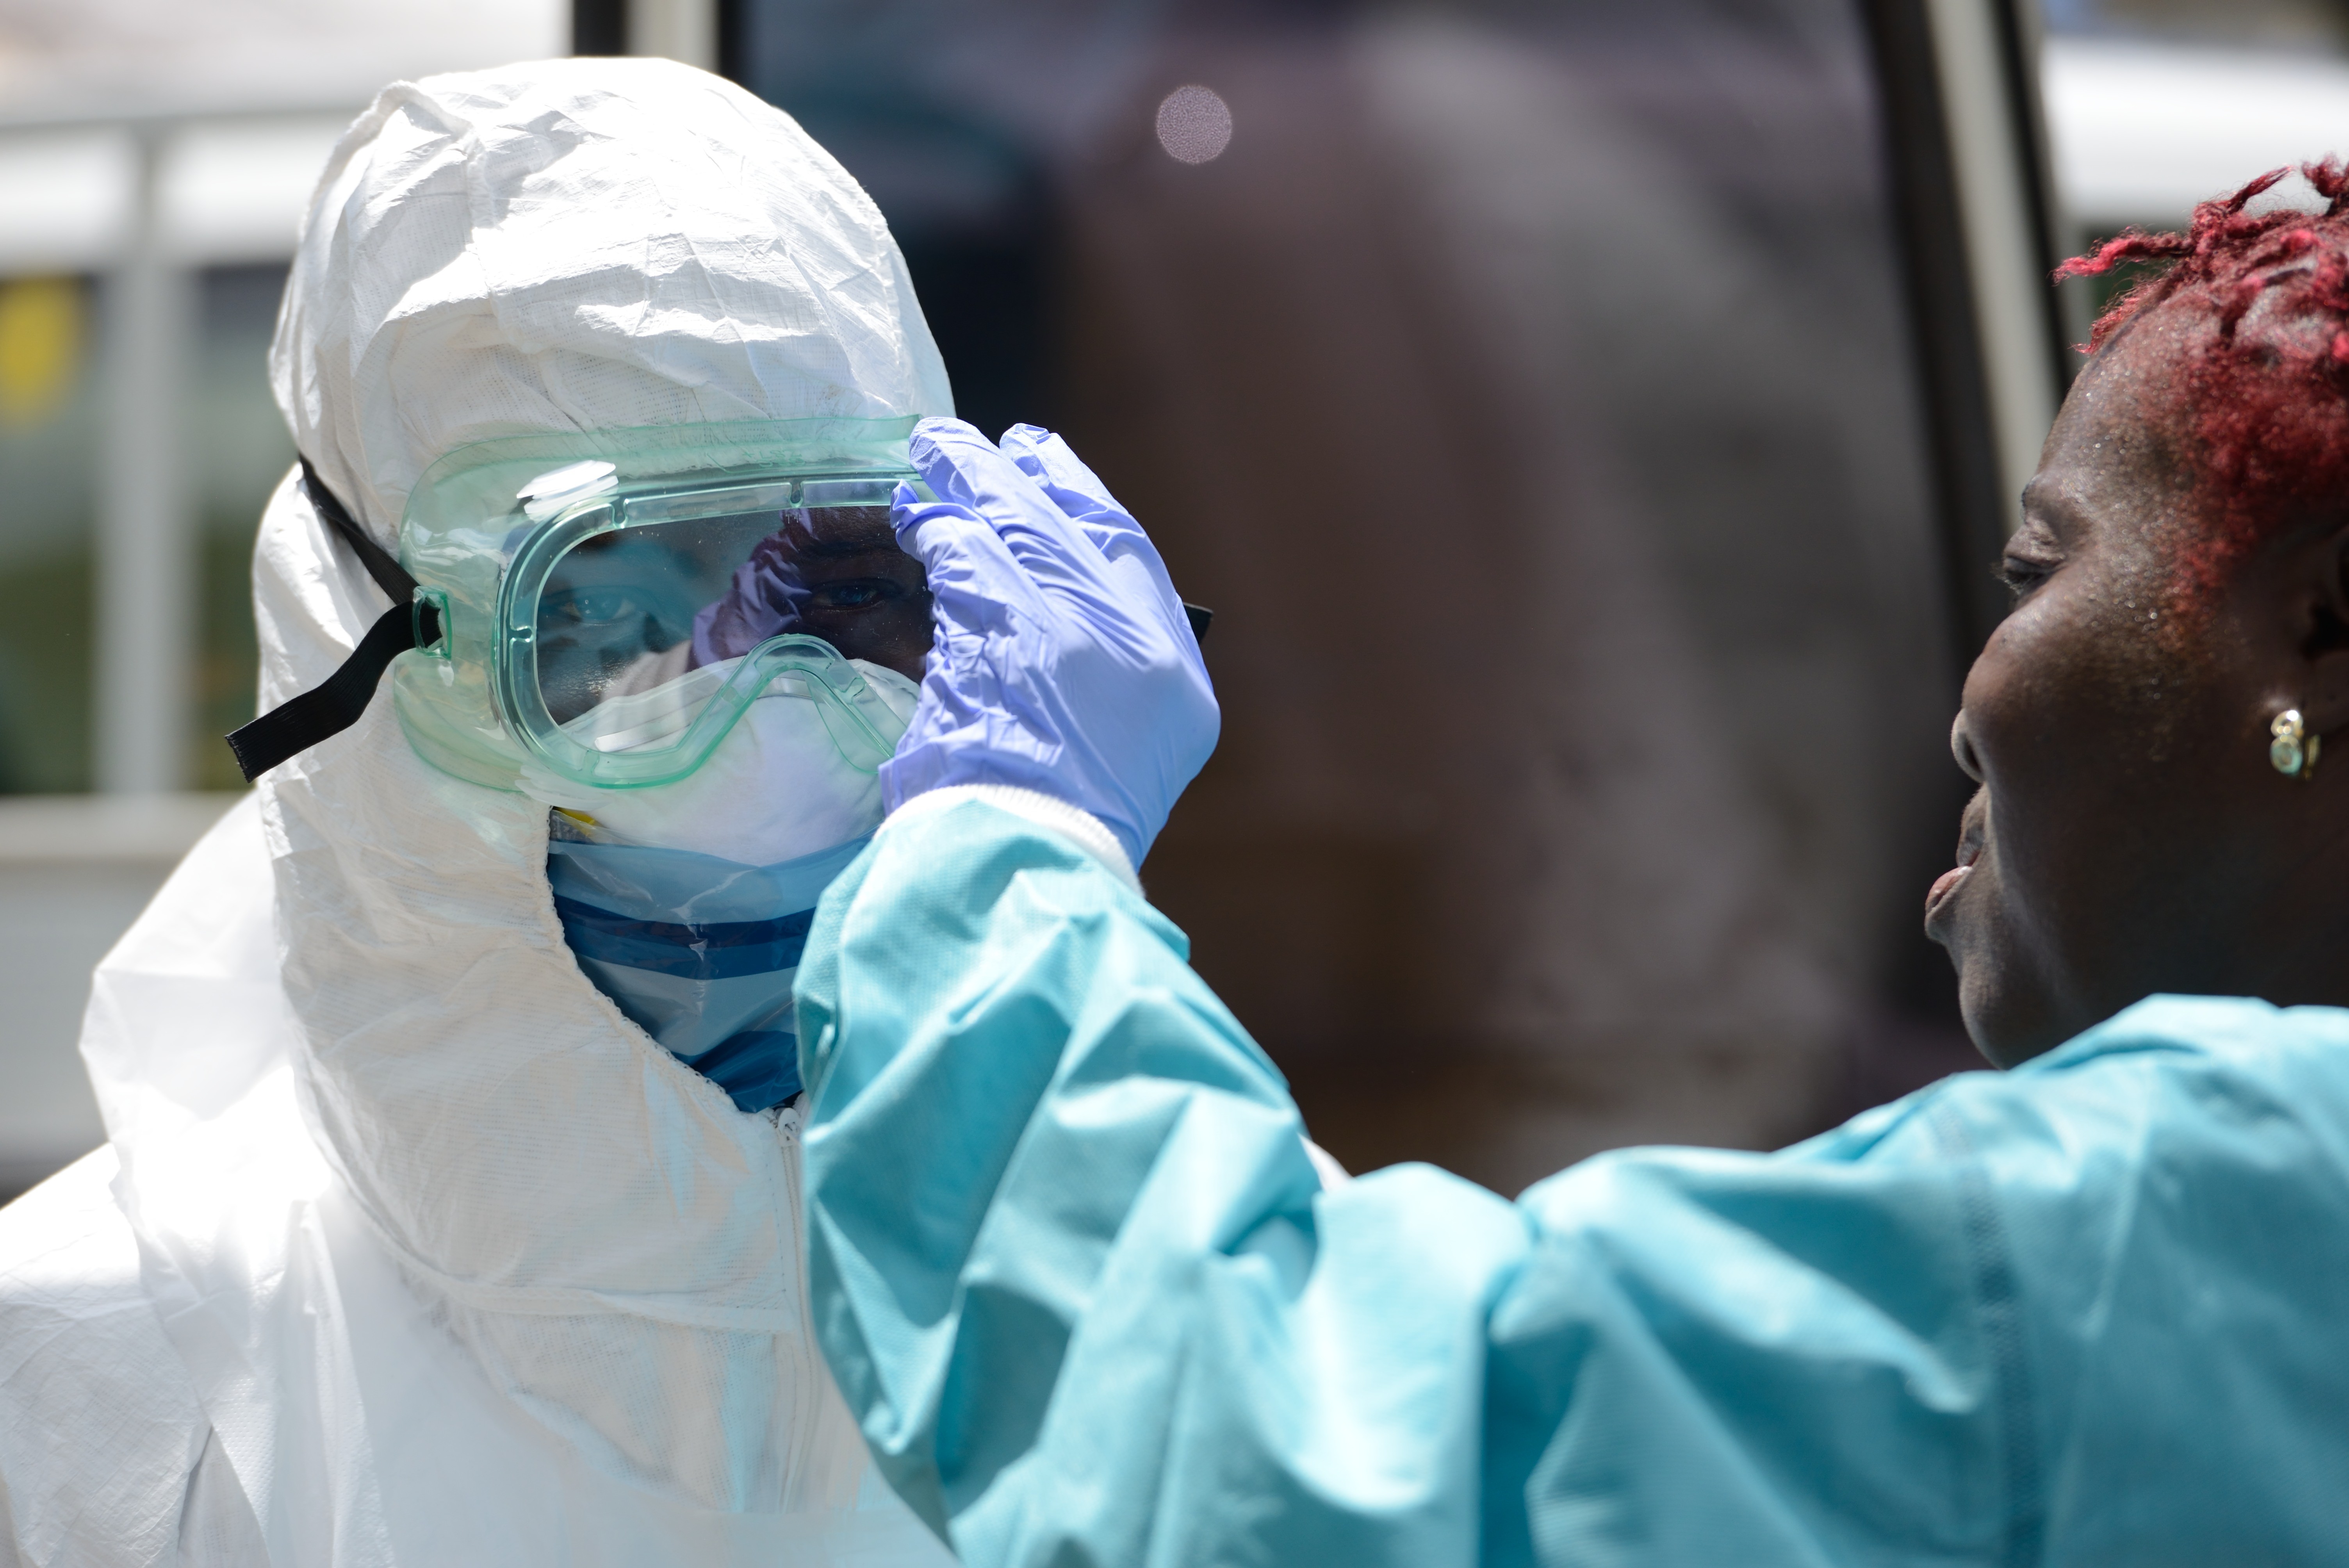 Ebola worker adjusts goggles